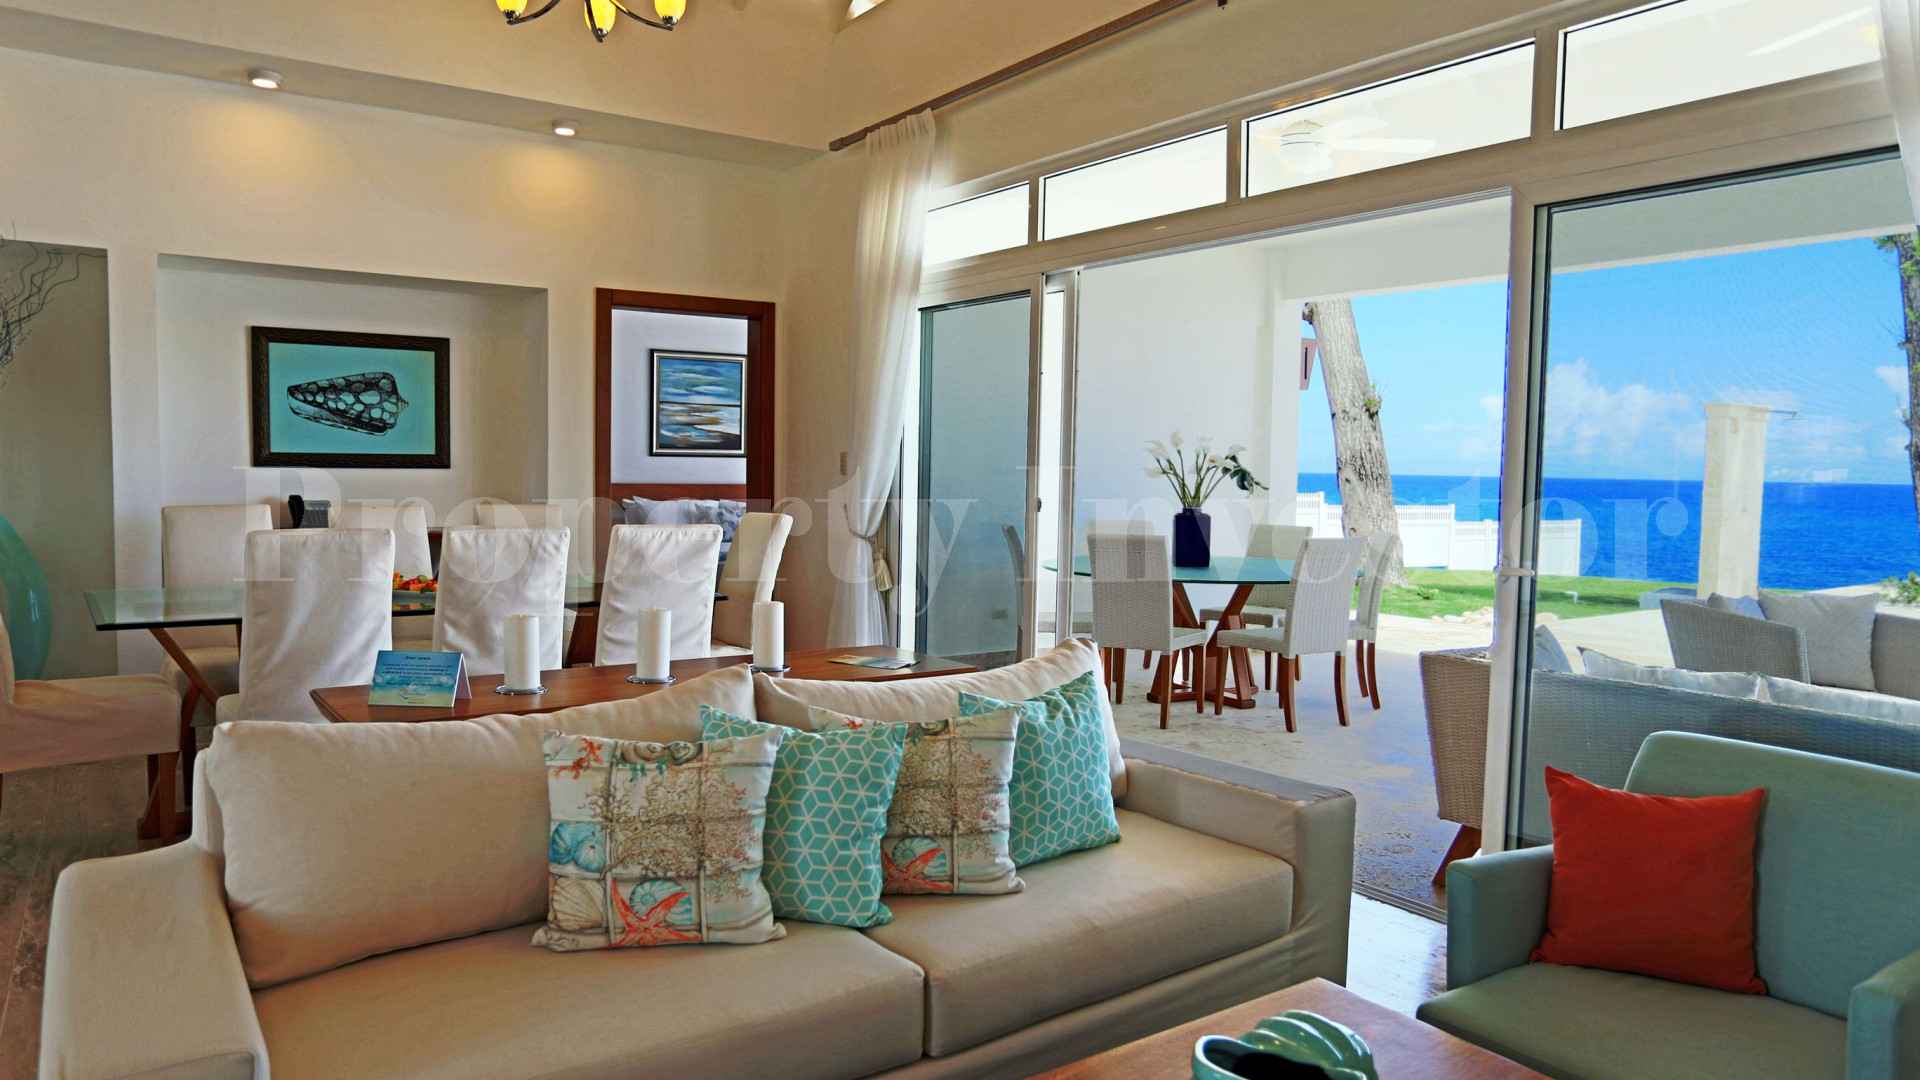 3 Bedroom Oceanfront Villa in the Dominican Republic with 30 Year Financing (Villa 1)